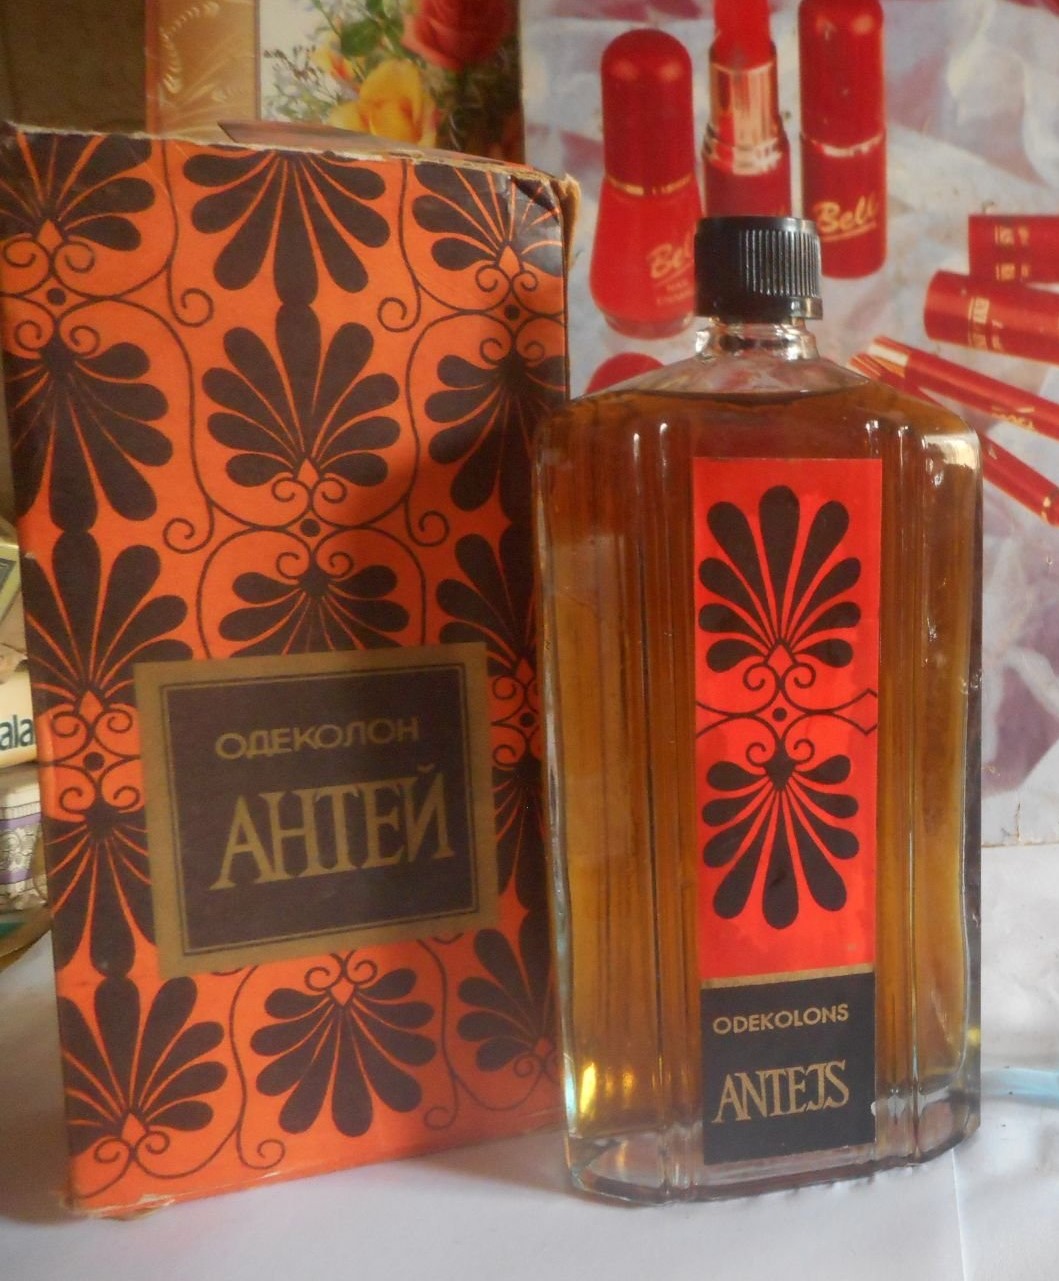 This perfume keeps the 'Greek Freak' always smelling fresh